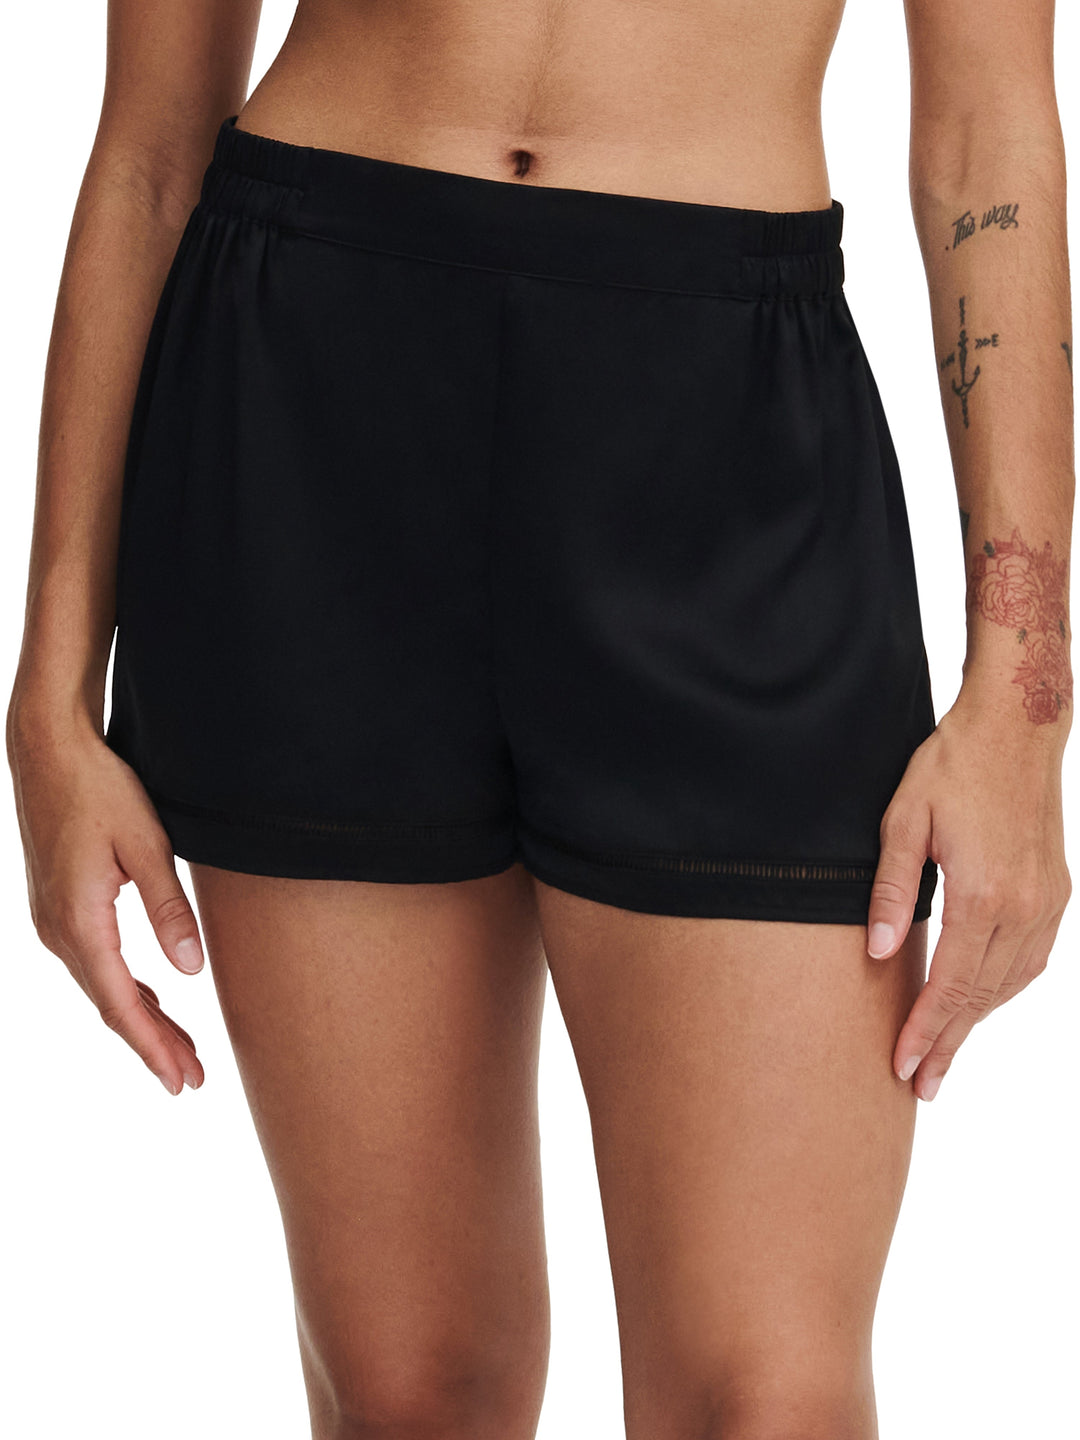 Chantelle Nightshade Shorts - Black Shorts Chantelle 